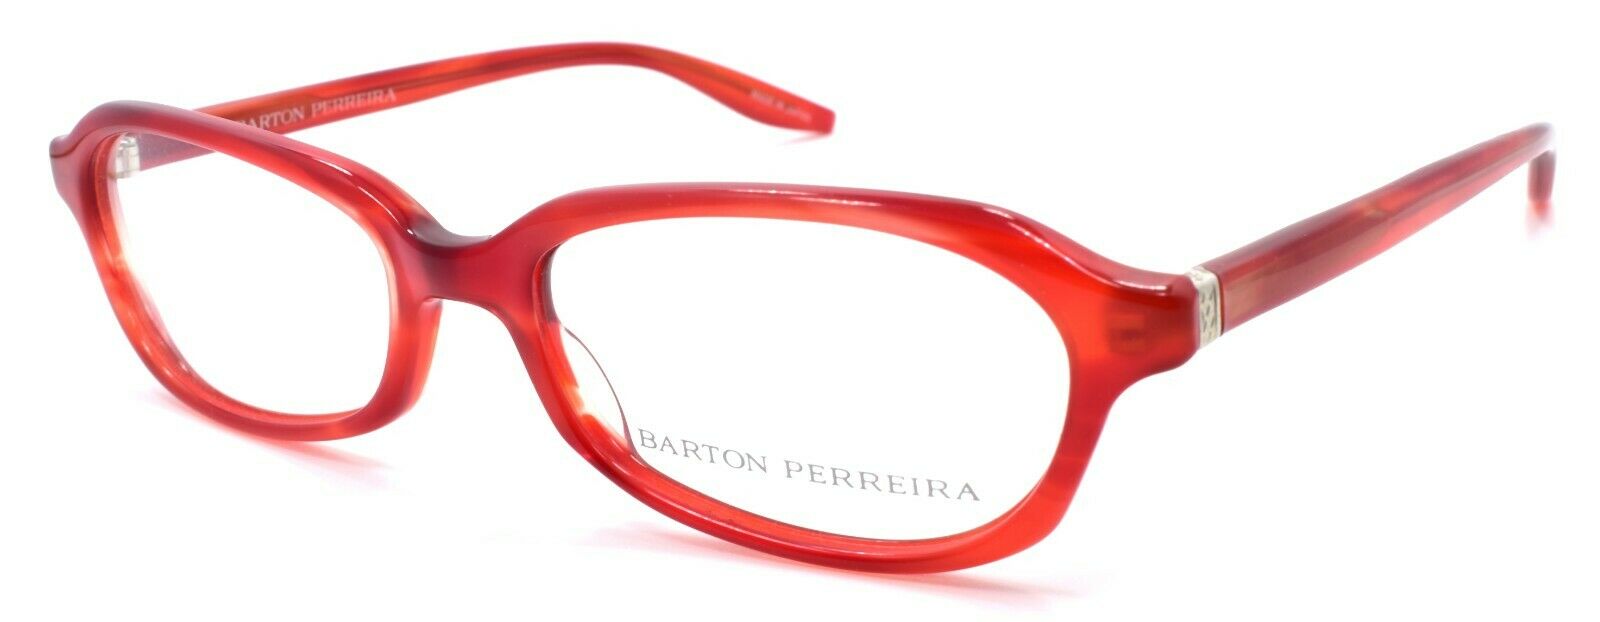 1-Barton Perreira Raynette SCA/SIL Women's Eyeglasses Frames 51-17-135 Scarlet Red-672263039211-IKSpecs